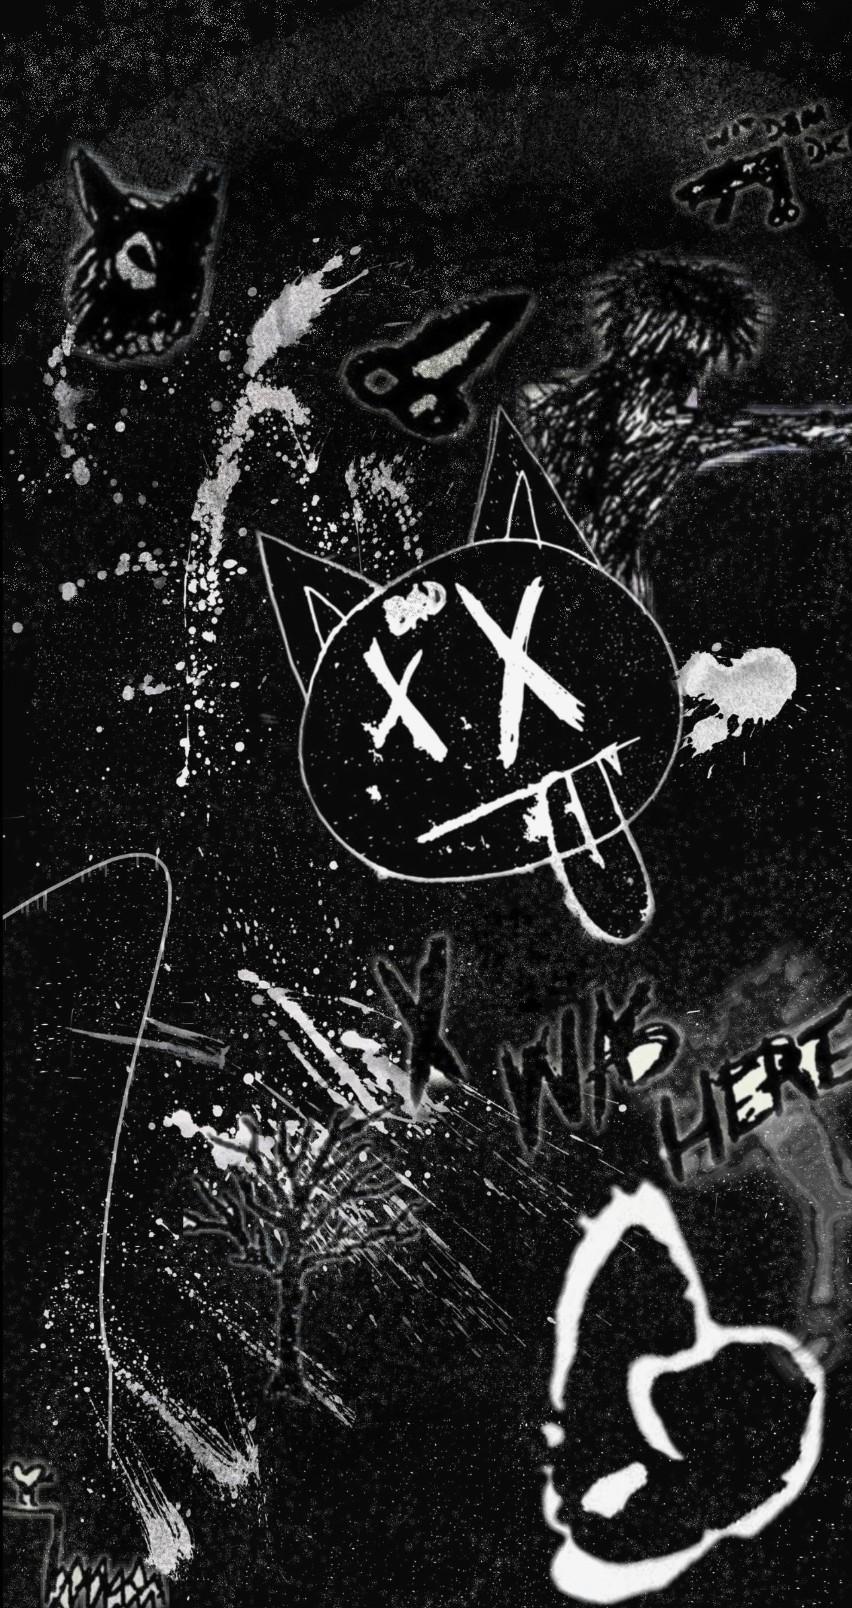 Free download XXXTentacion Album Wallpaper Top XXXTentacion Album